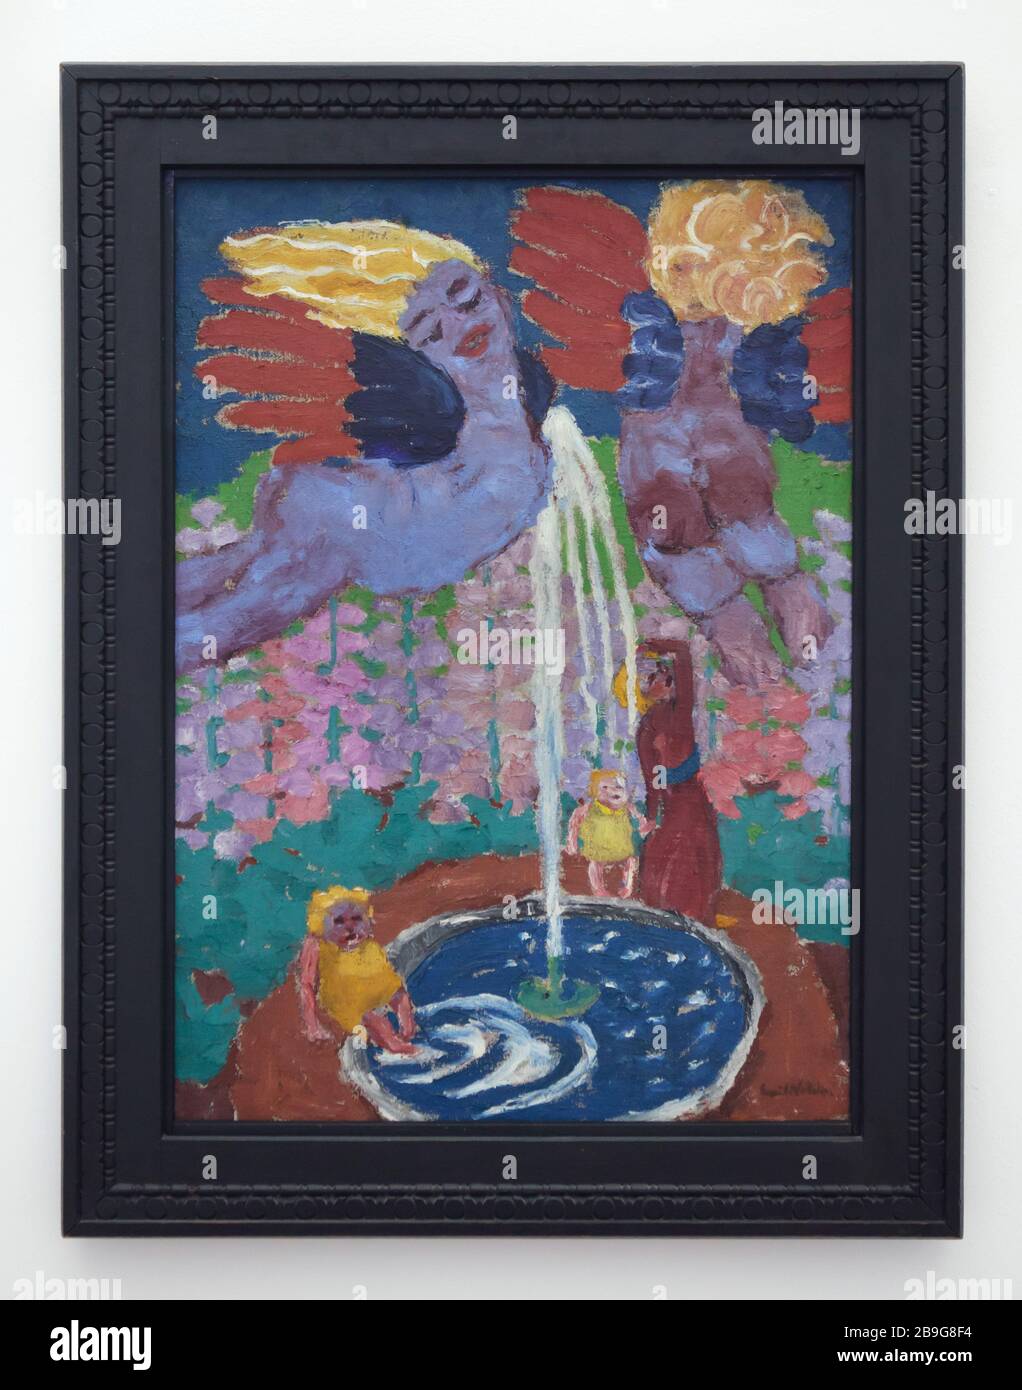 Peinture "Fontaine" du peintre expressionniste allemand Emil Nolde (1916) exposée dans le Staatliche Kunsthalle Karlsruhe (State Art Gallery) à Karlsruhe, Bade-Wurtemberg, Allemagne. Banque D'Images